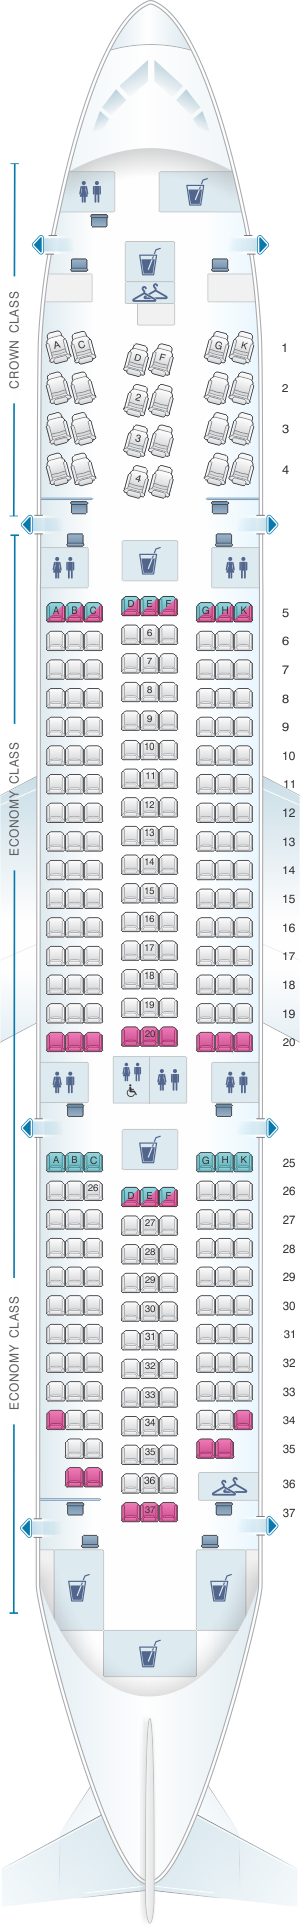 Royal Jordanian Flight 264 Seating Chart